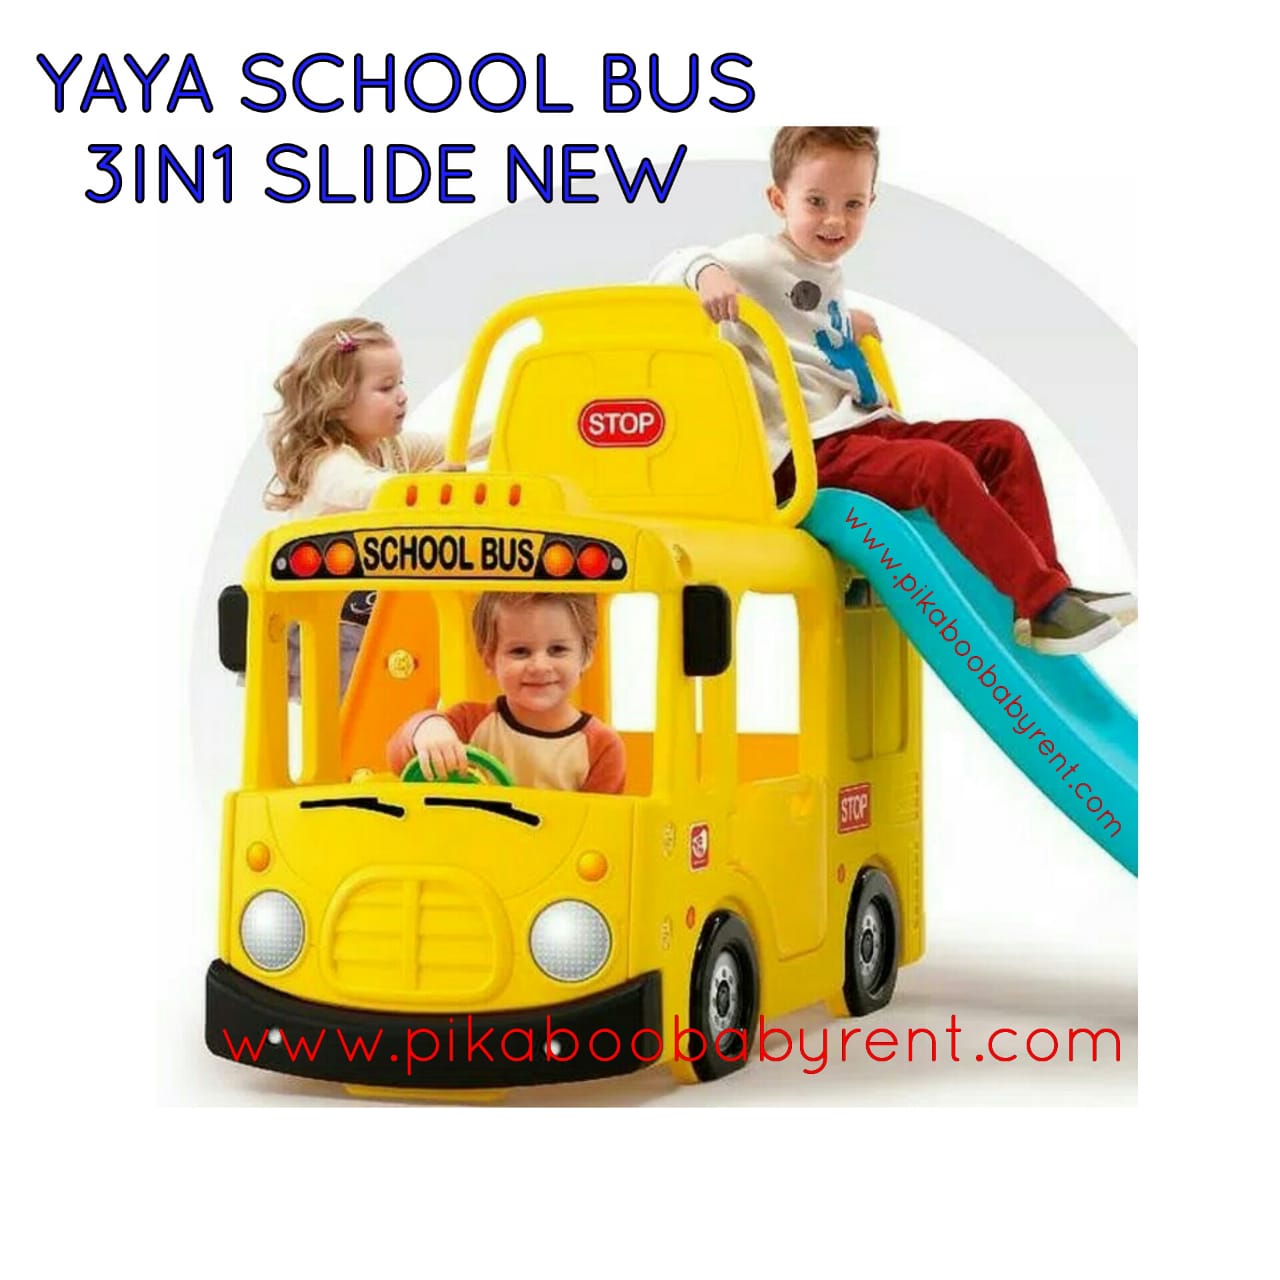 YAYA SCHOOL BUS 3 IN 1 SLIDE NEW